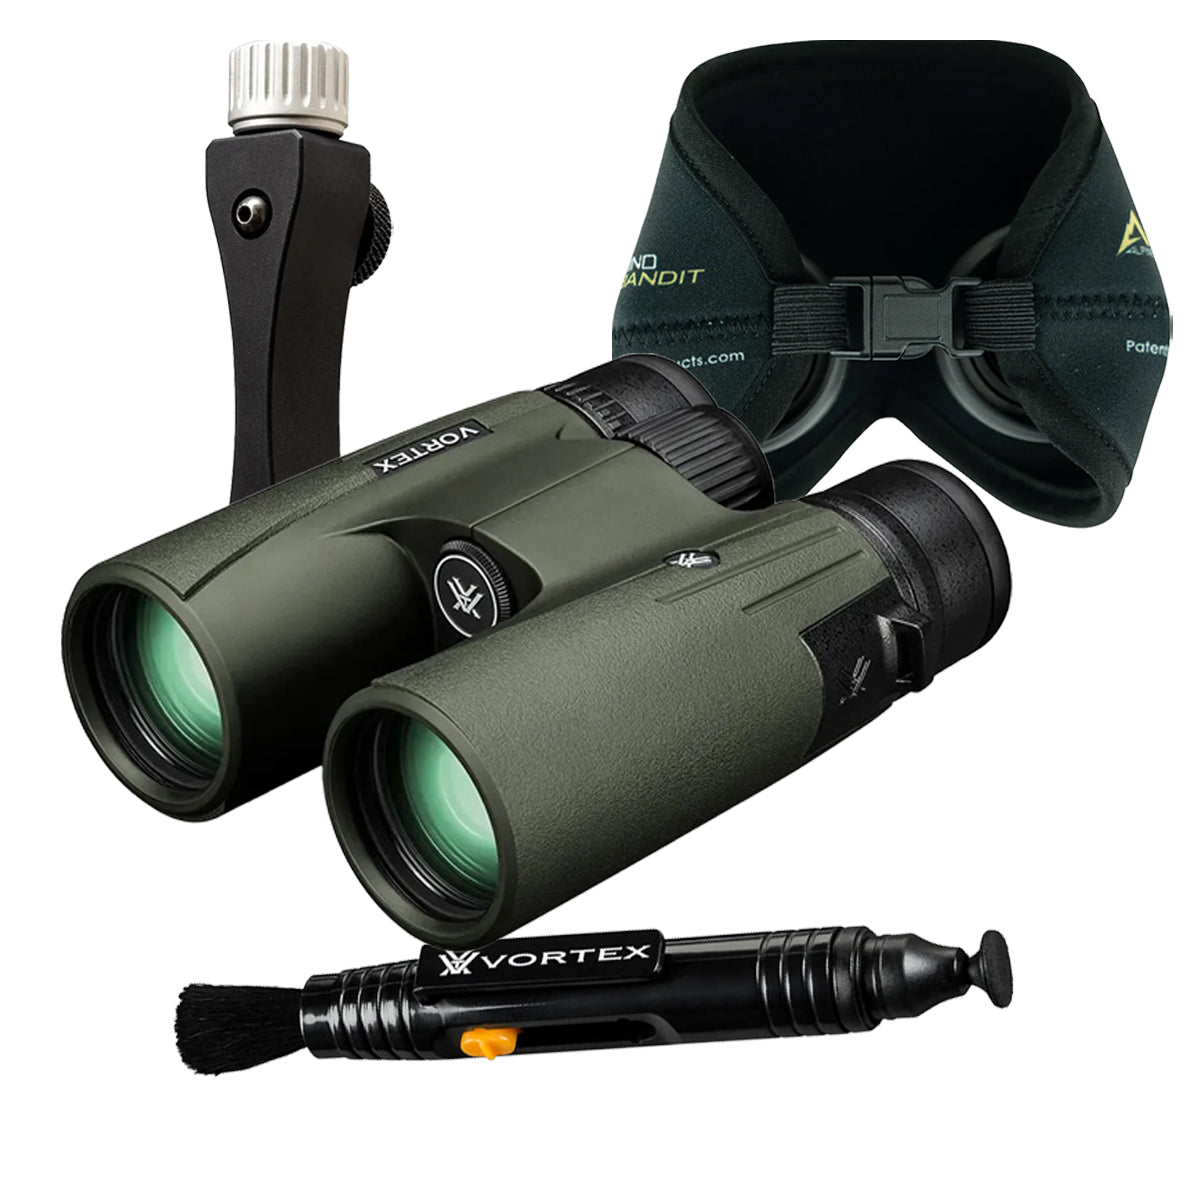 Vortex Binocular Package in  by GOHUNT | GOHUNT Shop - GOHUNT Shop